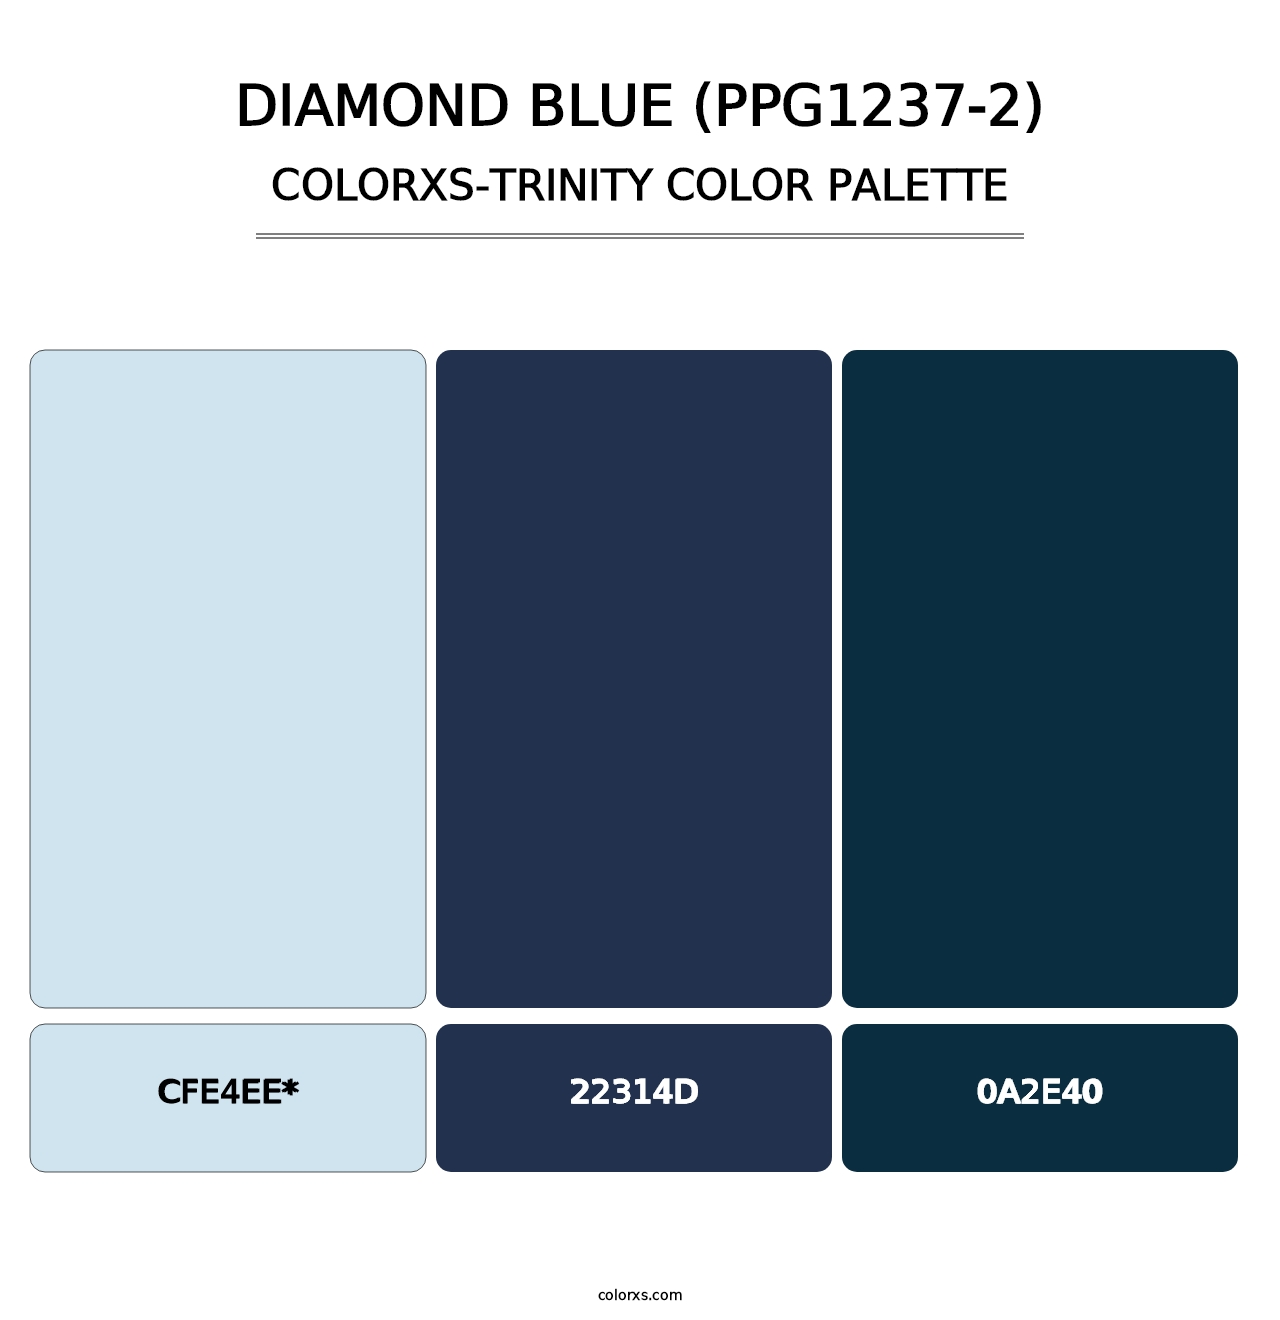 Diamond Blue (PPG1237-2) - Colorxs Trinity Palette